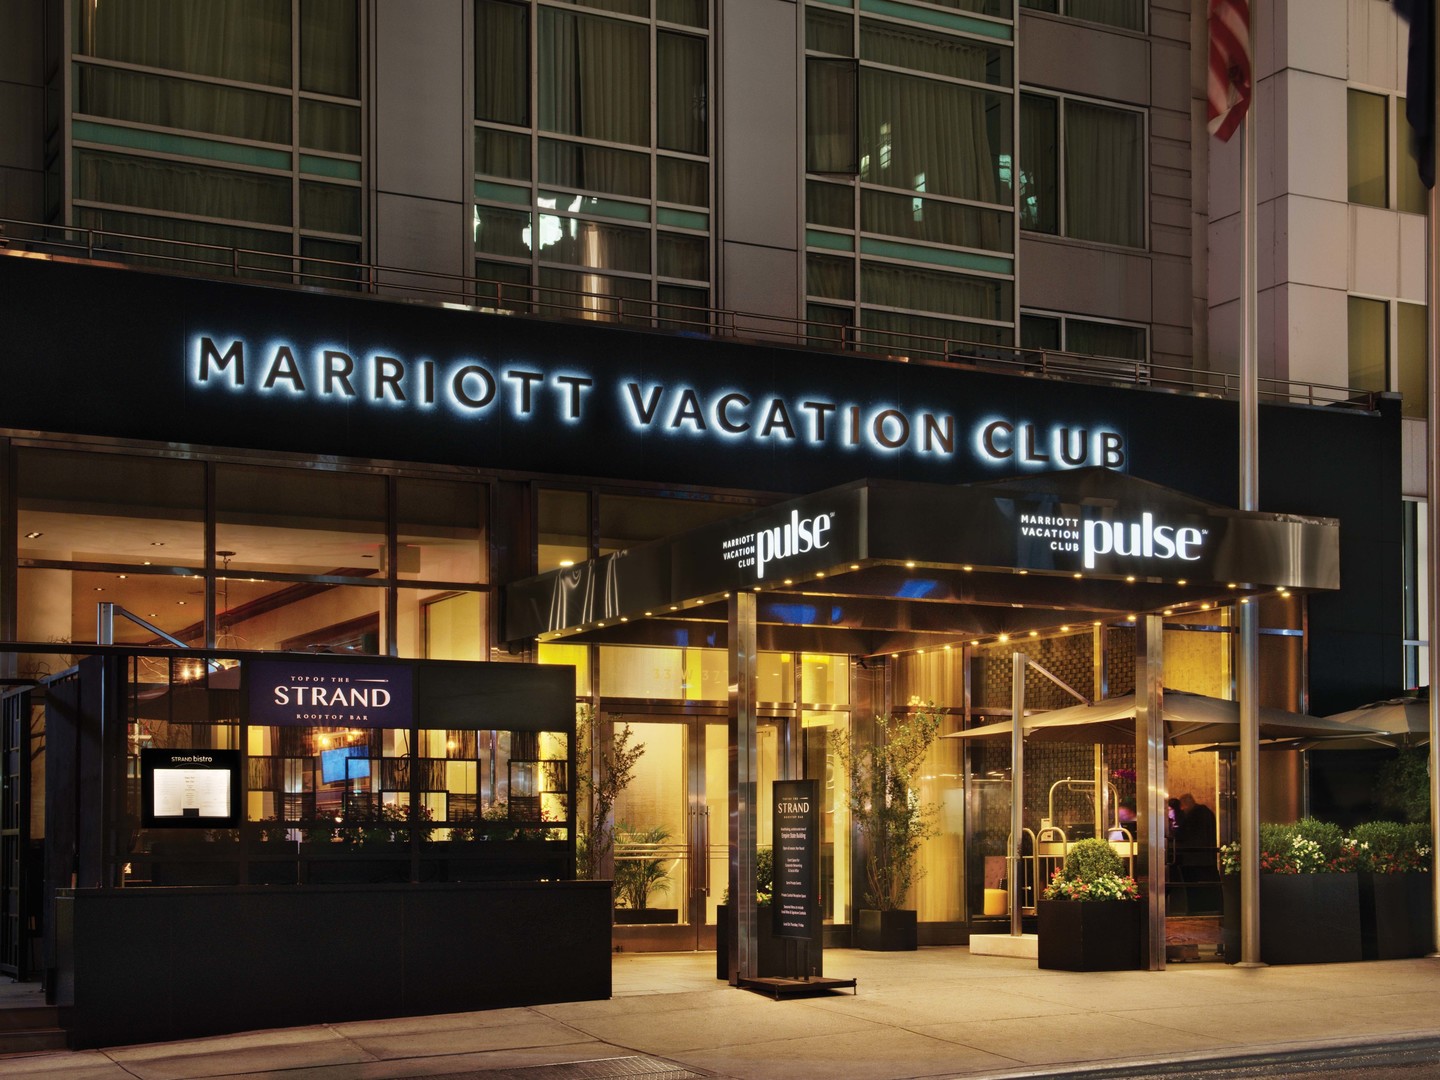 Marriott Vacation Club updated - Marriott Vacation Club